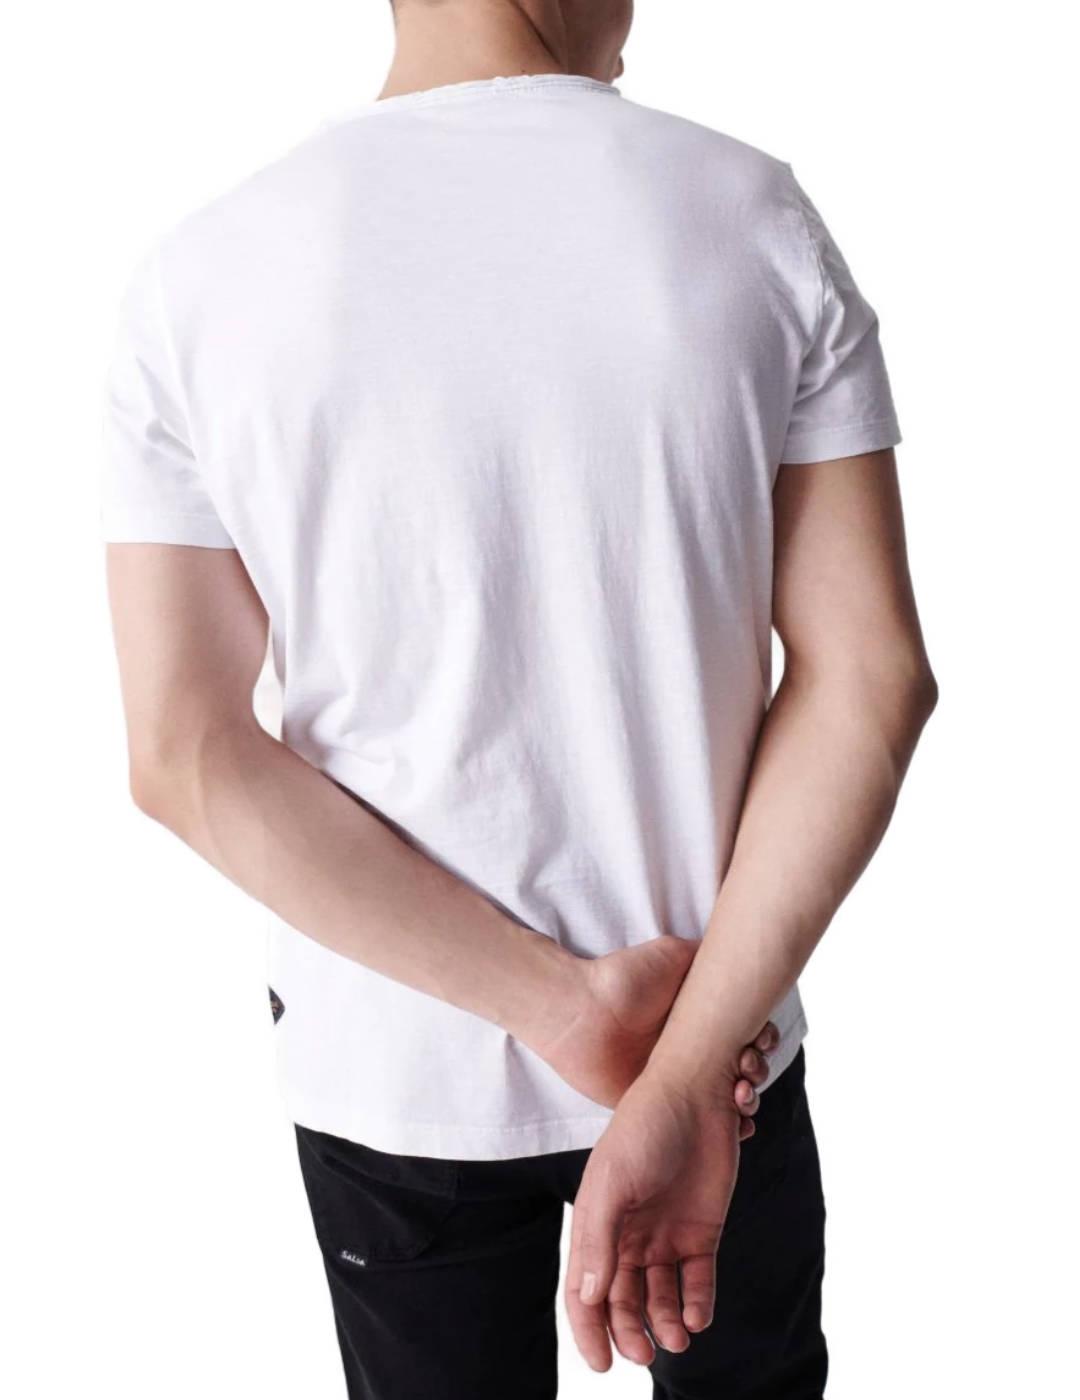 Camiseta Salsa lavado blanco escote en V hombre